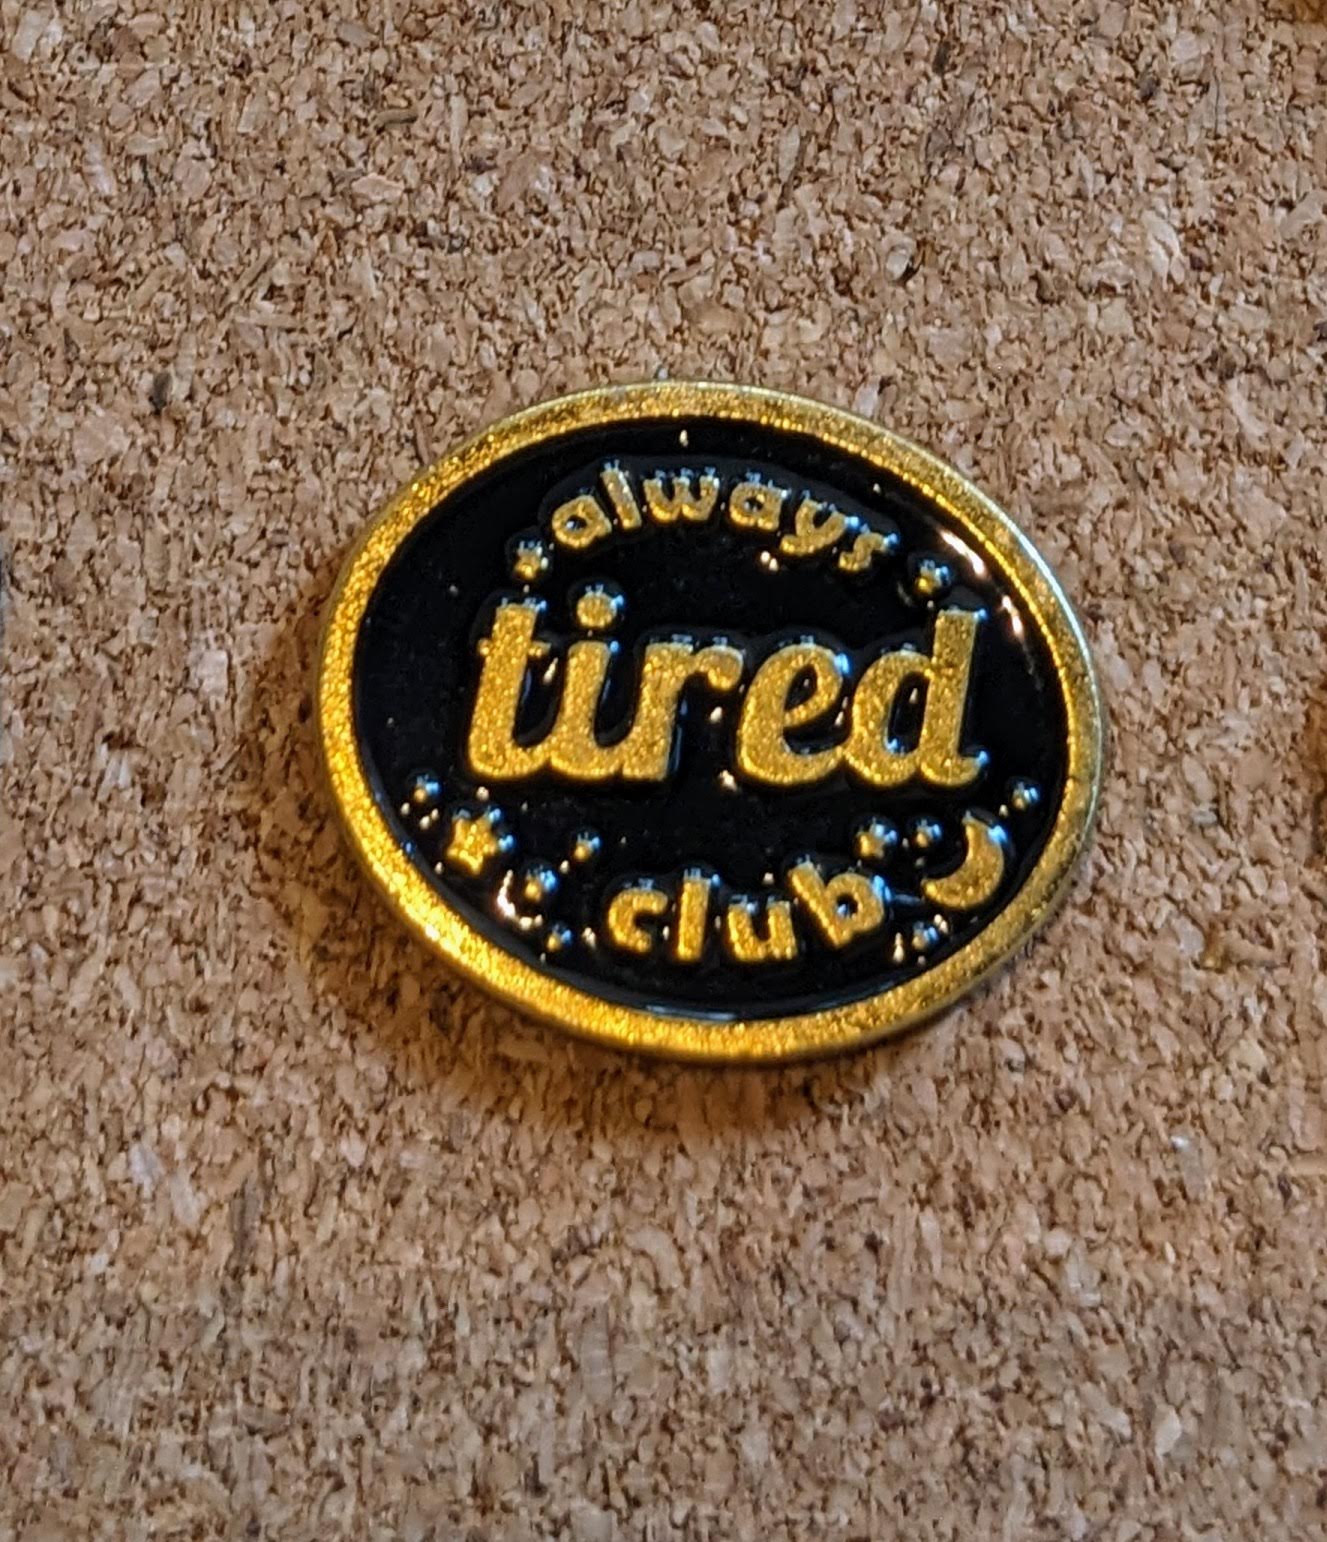 Always Tired Club Pin